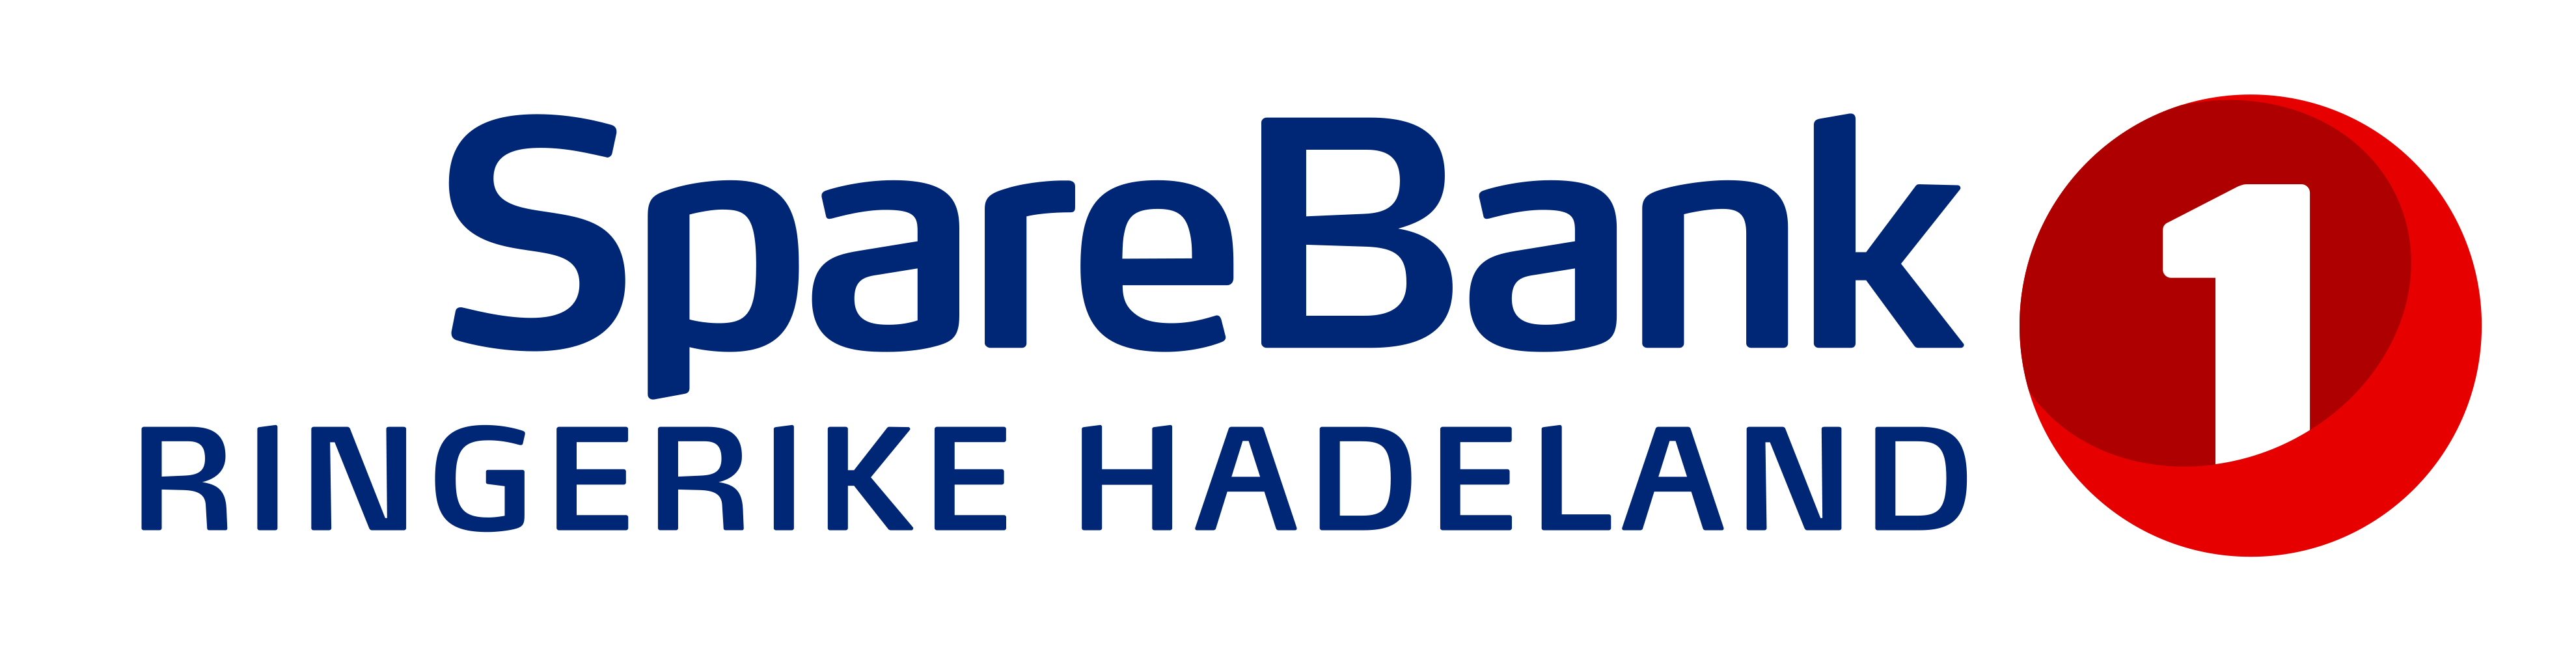 SpareBank 1 Ringerike Hadeland logo